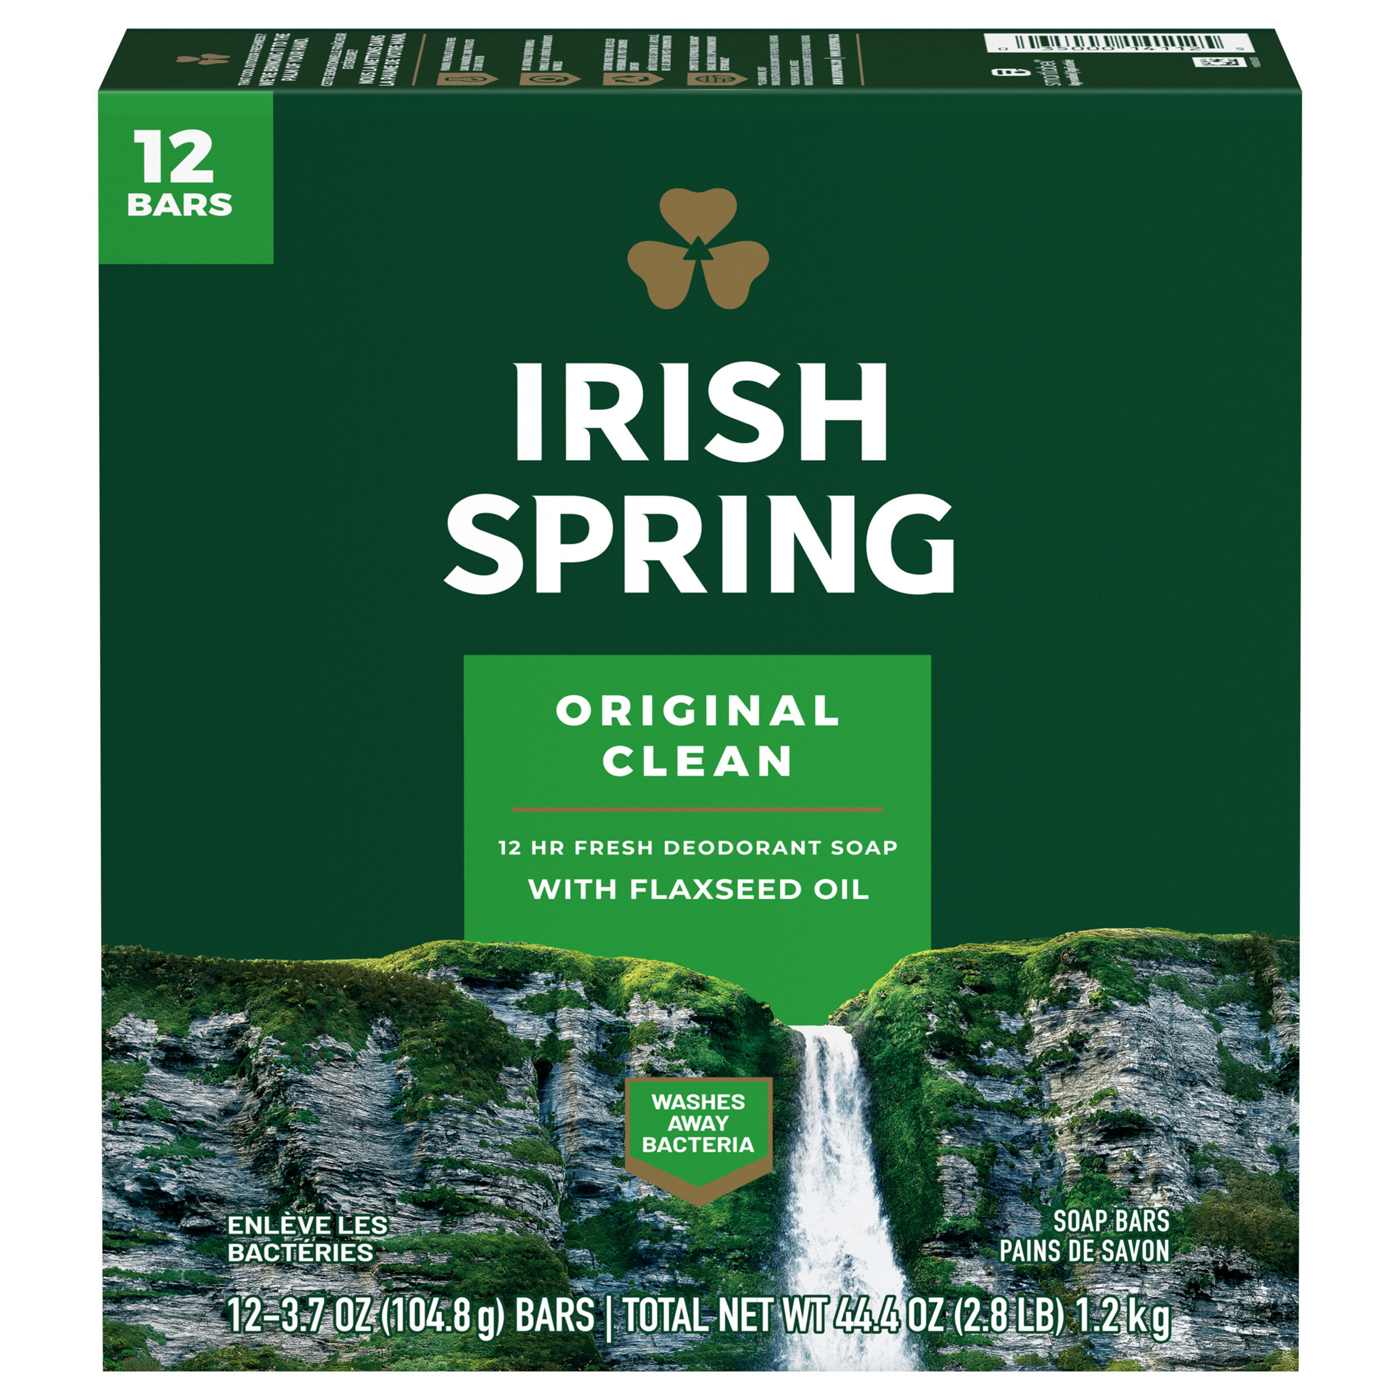 Irish Spring Original Clean Deodorant Bar Soap for Men; image 1 of 9